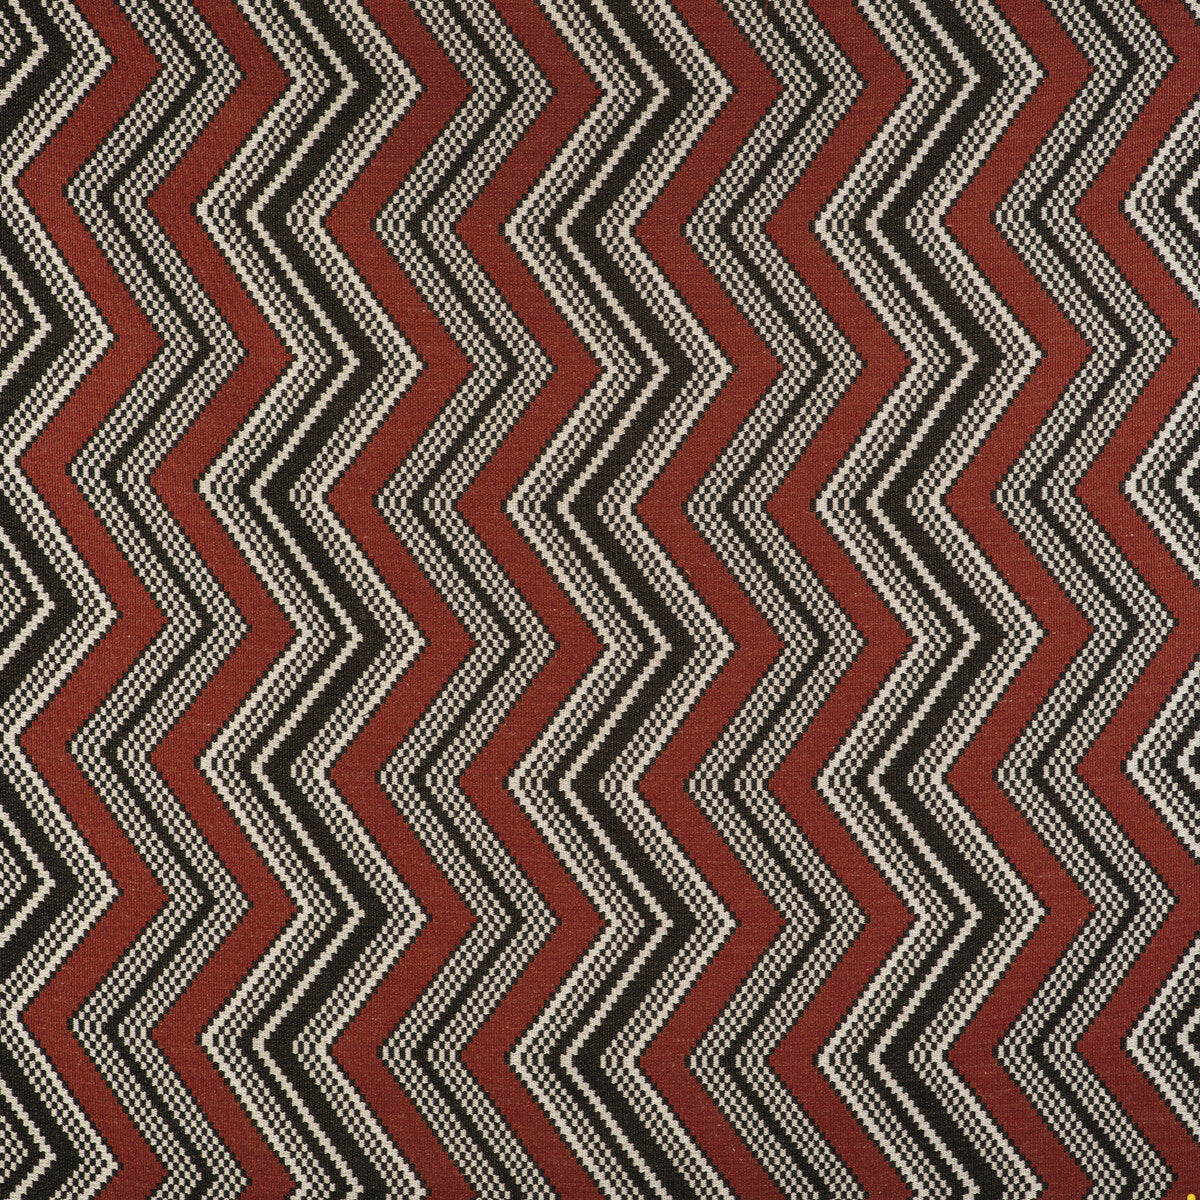 Zig Zag fabric in rojo color - pattern GDT5498.003.0 - by Gaston y Daniela in the Gaston Libreria collection